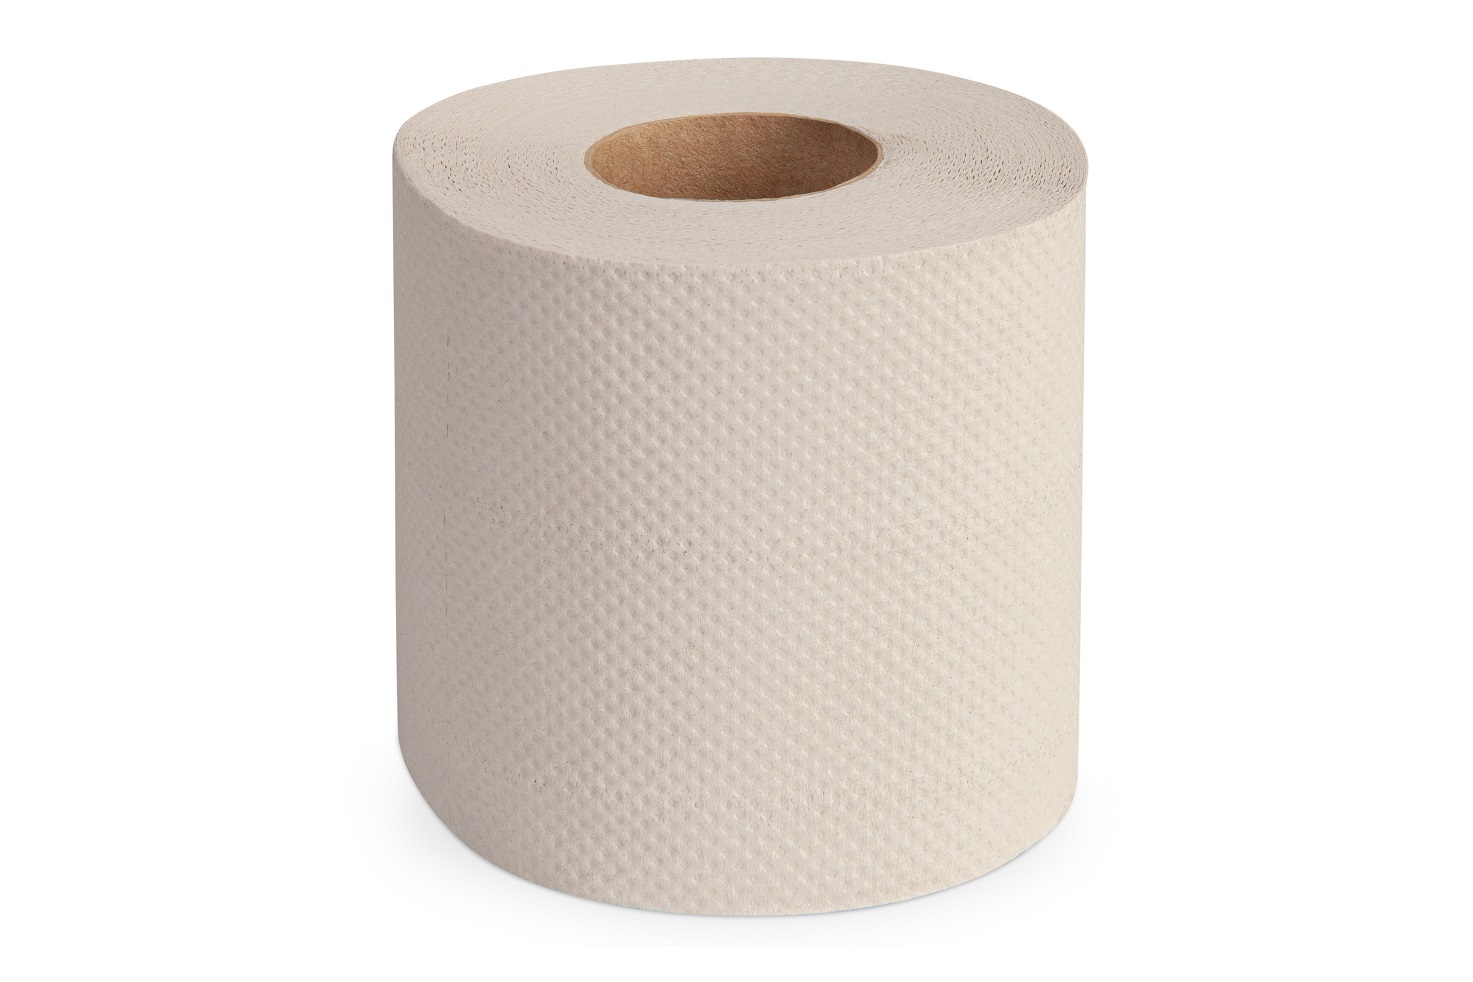 Toilettenpapier Kleinrolle, 2-lagig, 250 Blatt - Recycling